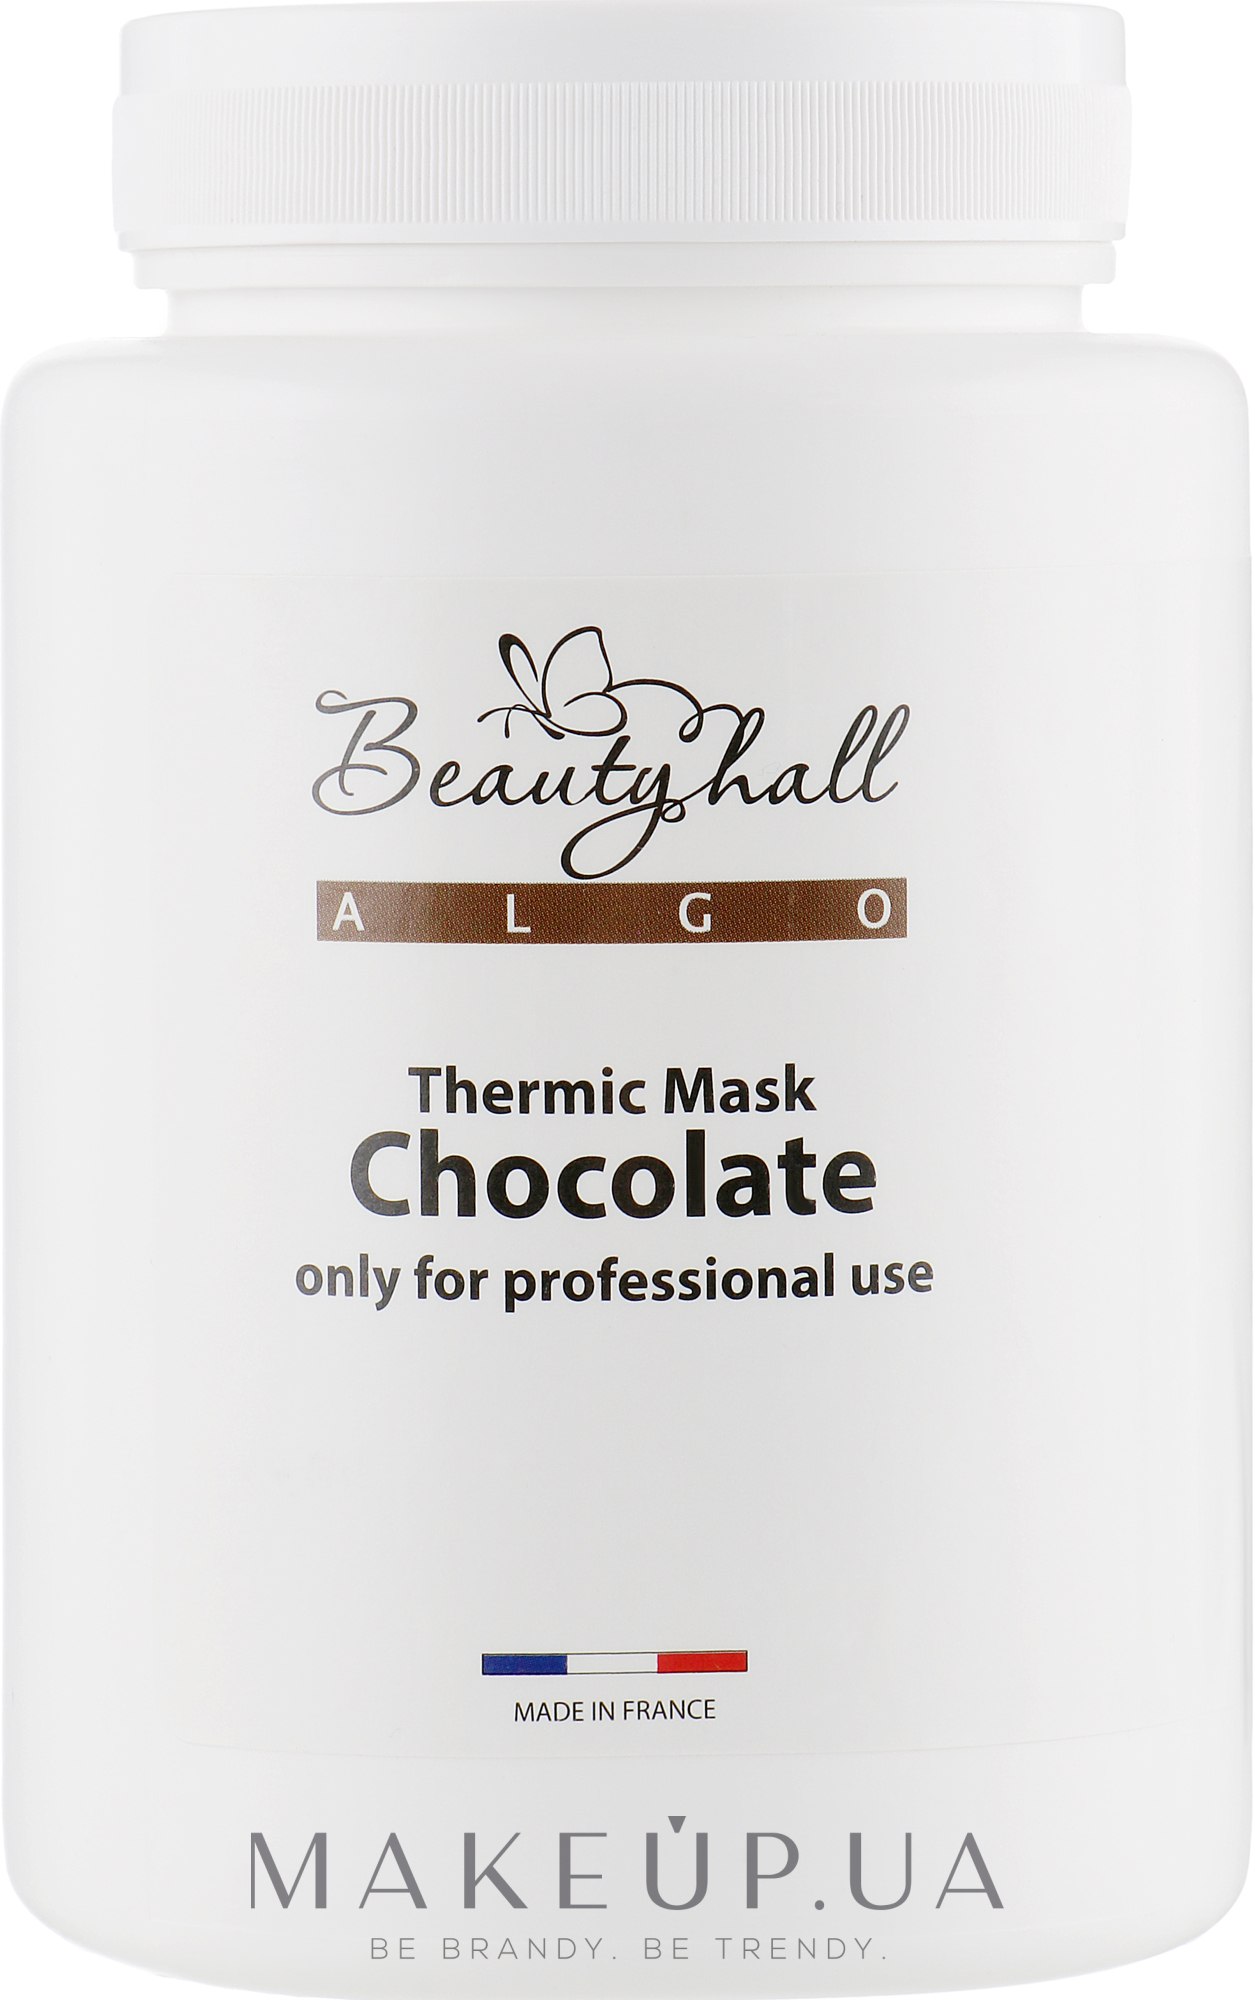 Гипсовая термомоделирующая маска "Шоколад" - Beautyhall Algo Thermic Mask Chocolate — фото 200g